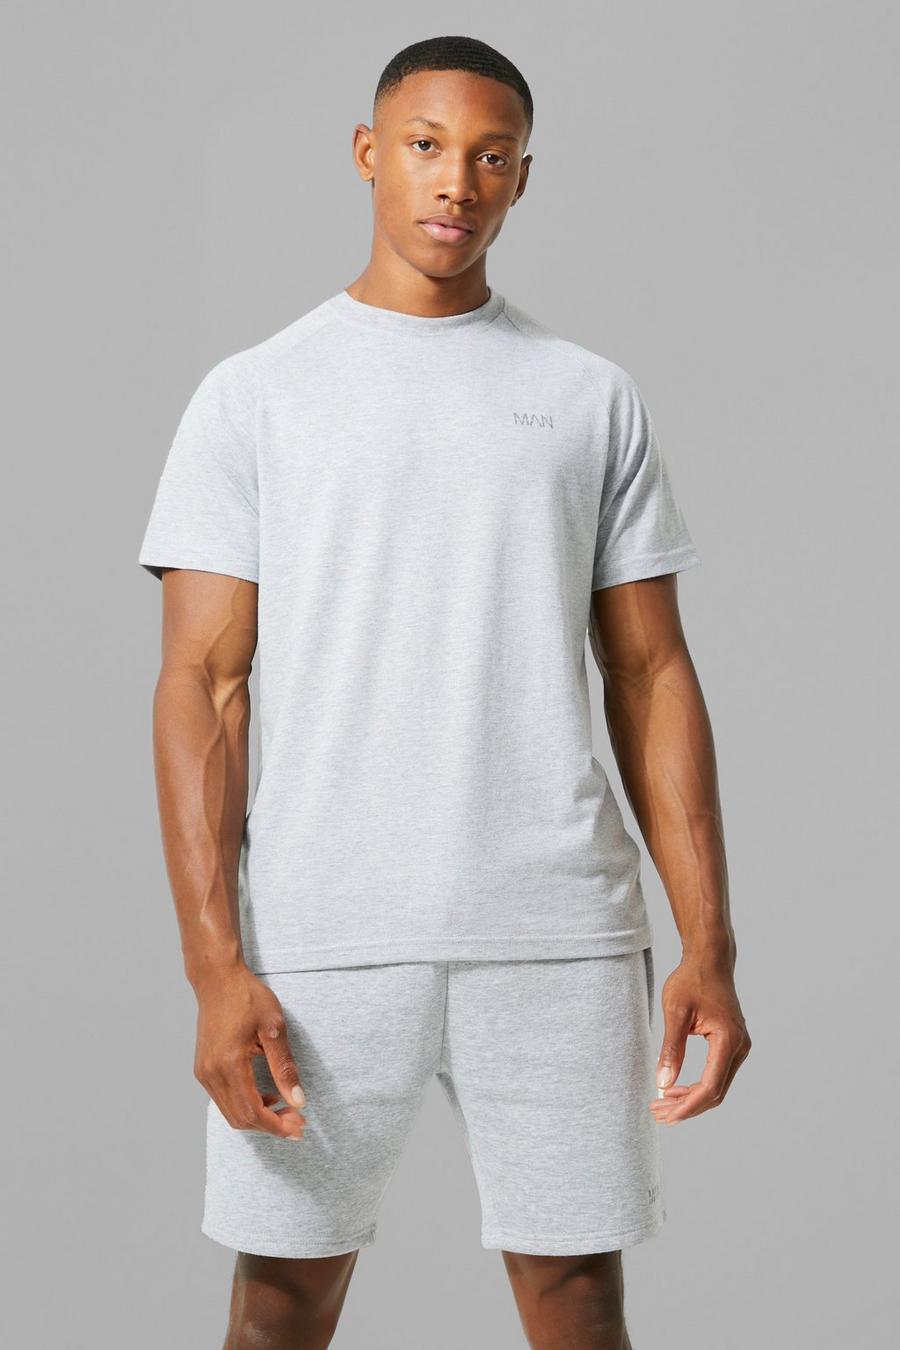 Man Active Raglan T-Shirt, Grey marl grau